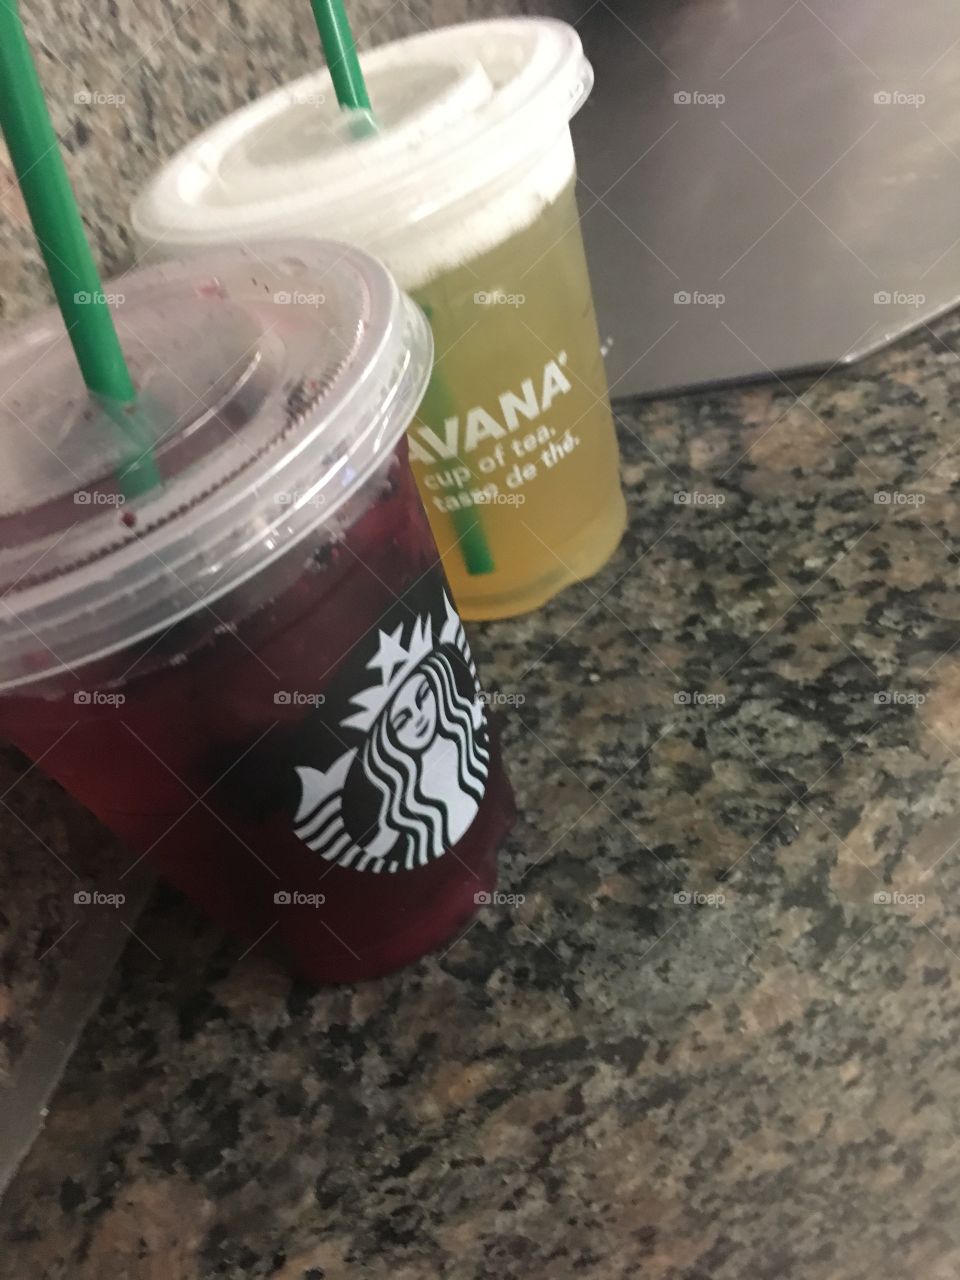 Starbucks through work